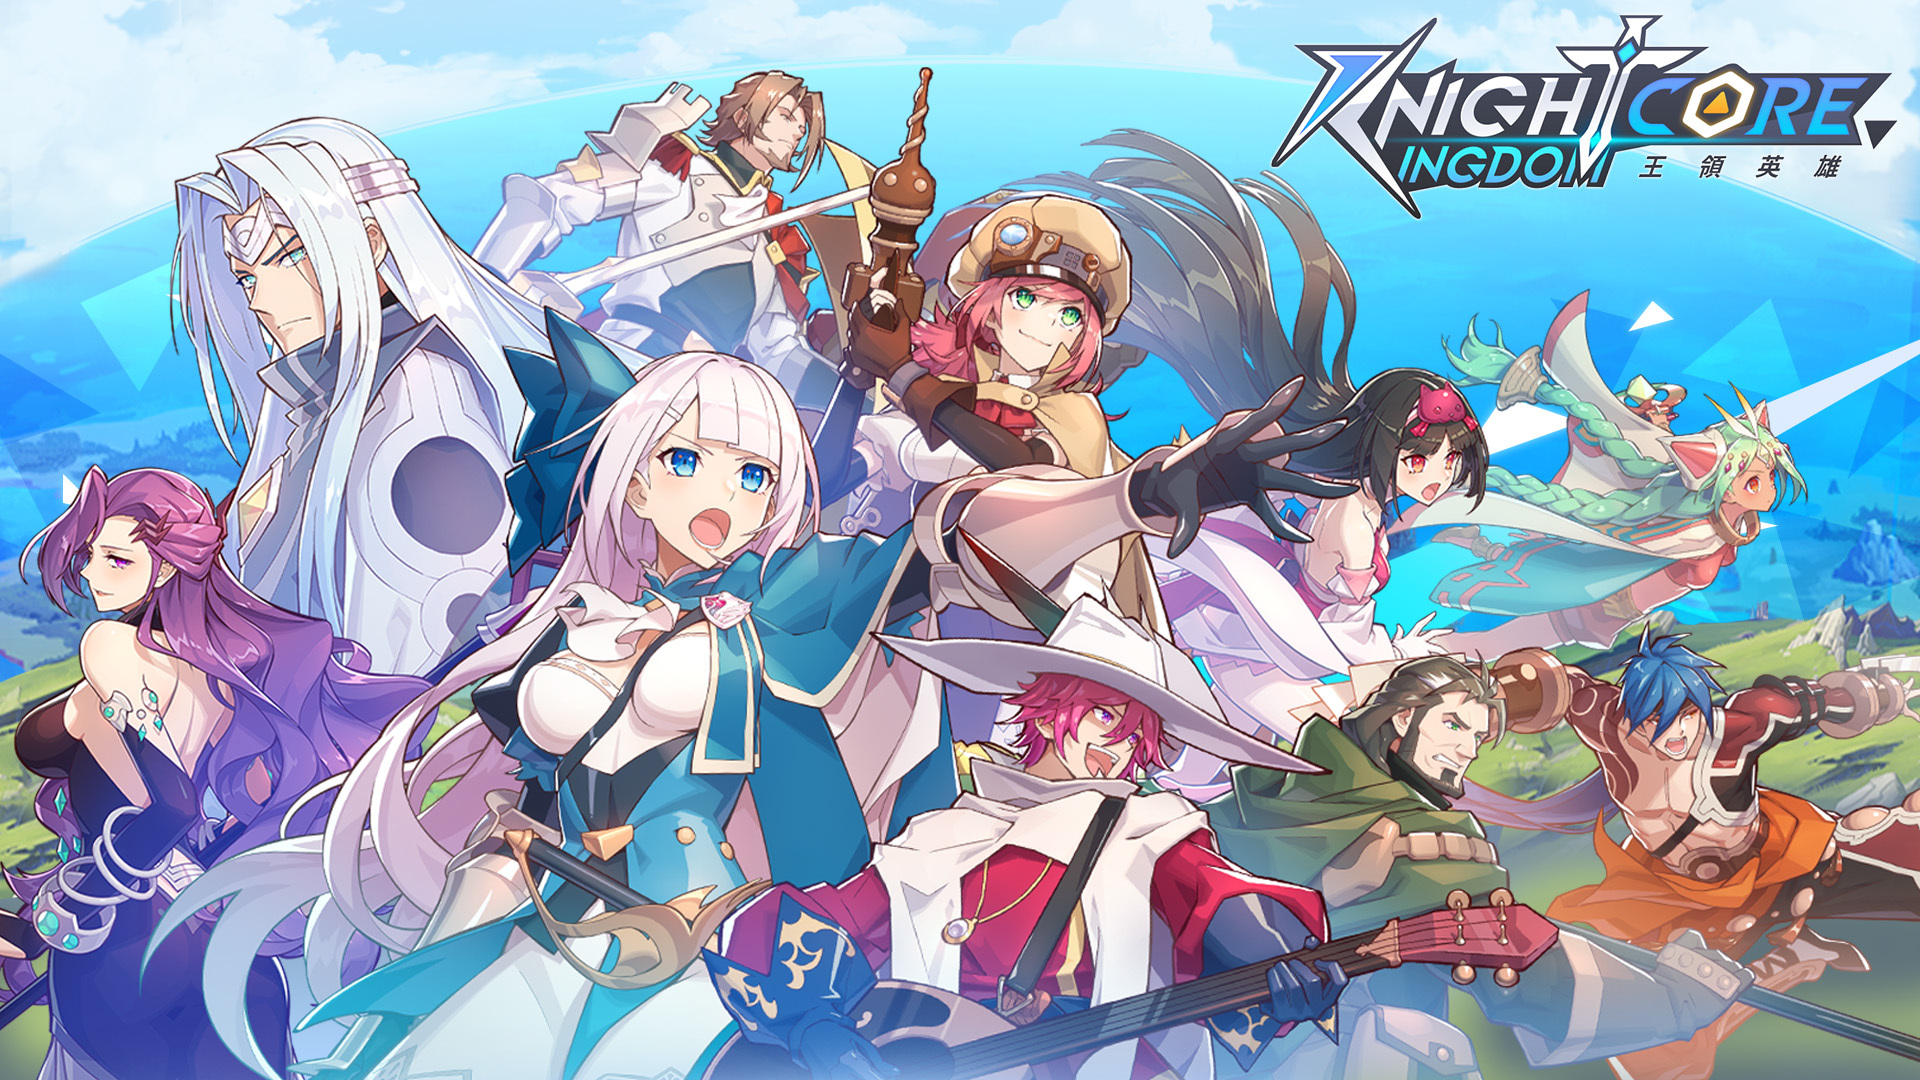 Knightcore Kingdom(ナイトコアキングダム)～王領英雄～　
事前登録者数1万人突破！
日本最大規模のゲームメディアでランクイン！